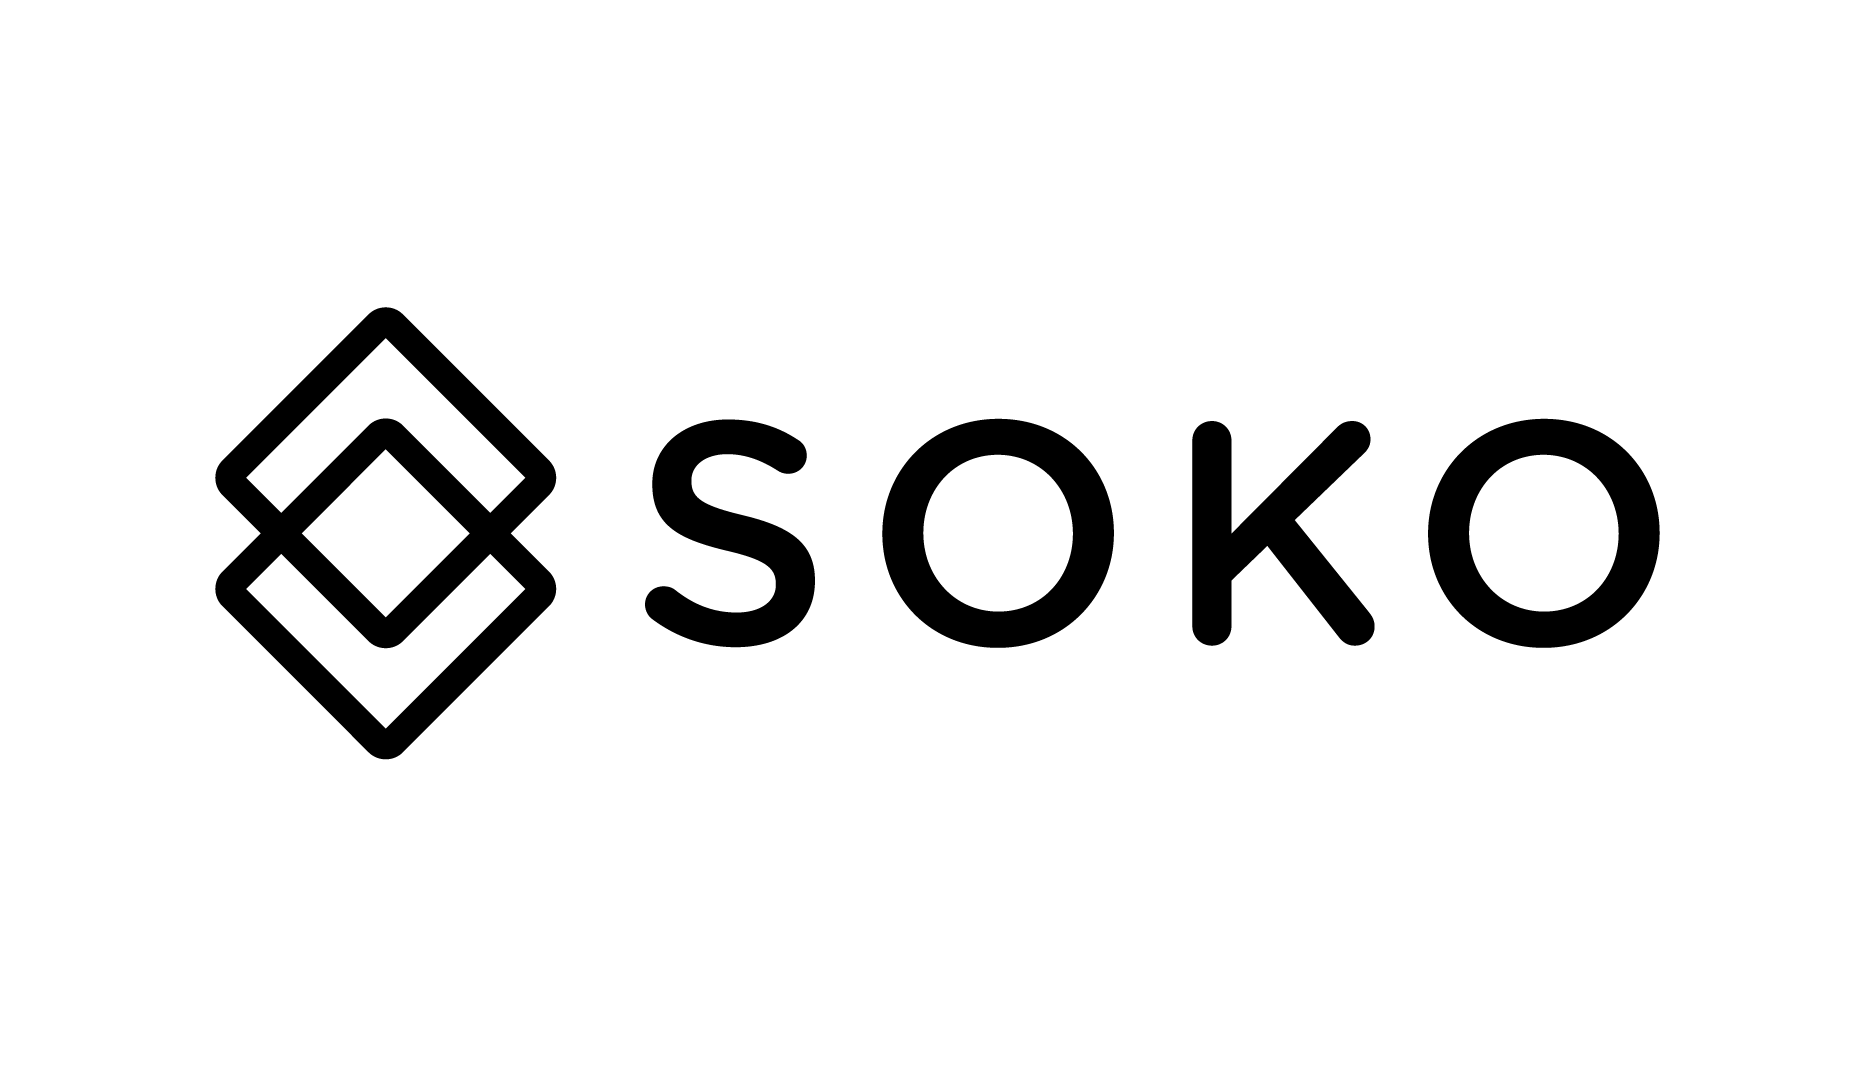 Soko logo